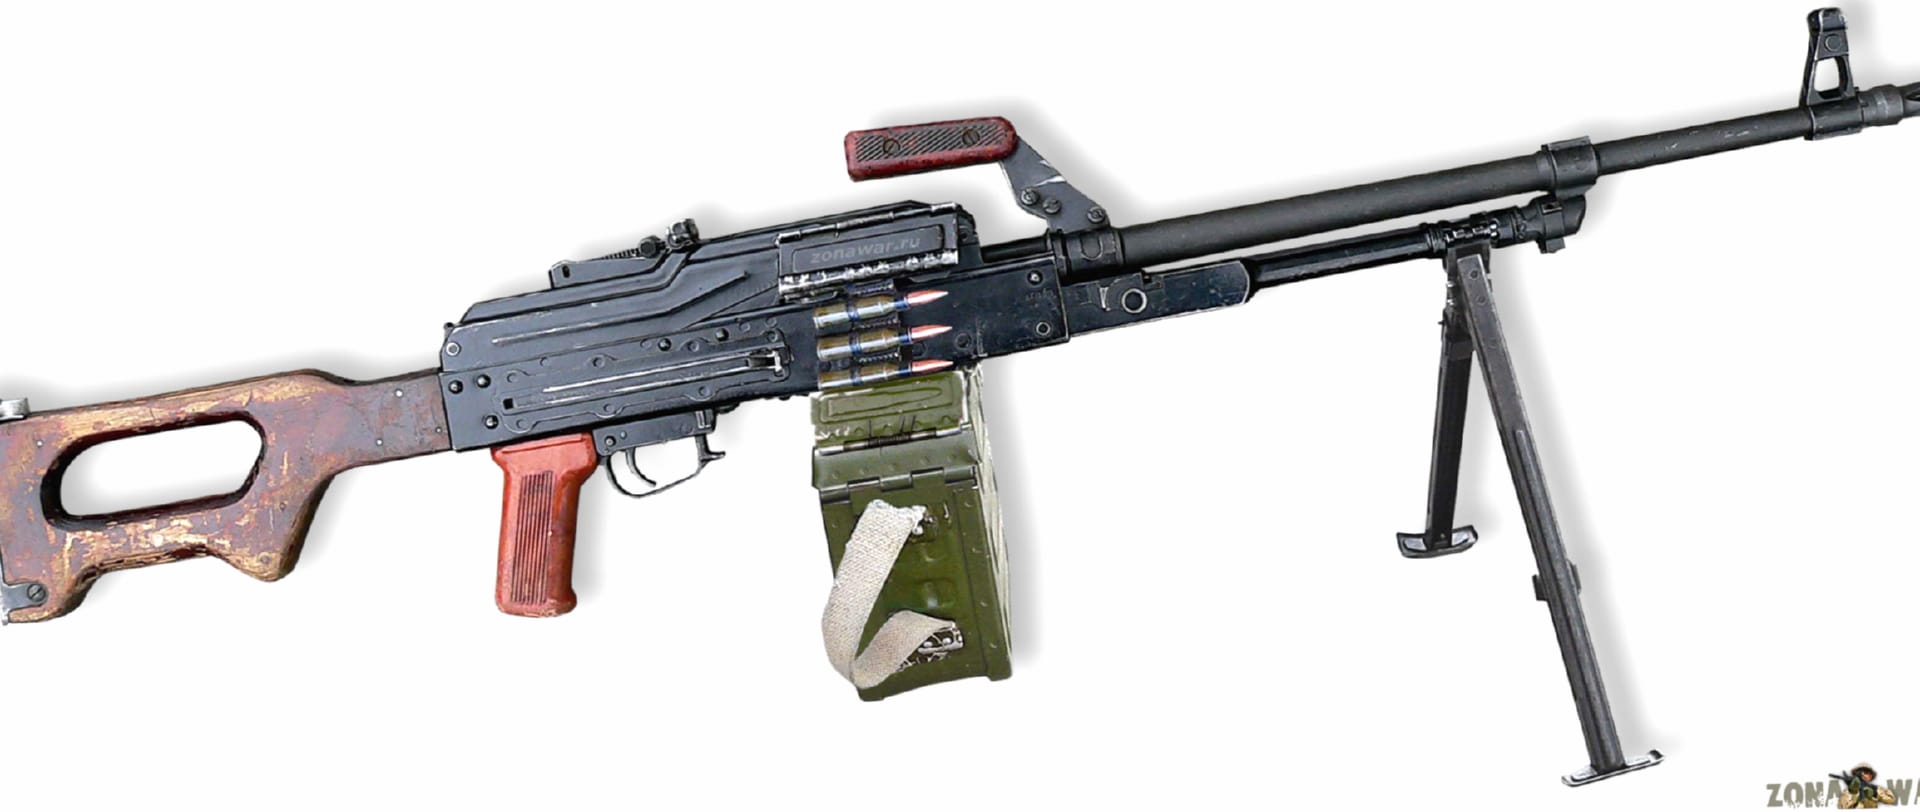 Kalashnikov Pk Rifle at 750 x 1334 iPhone 6 size wallpapers HD quality